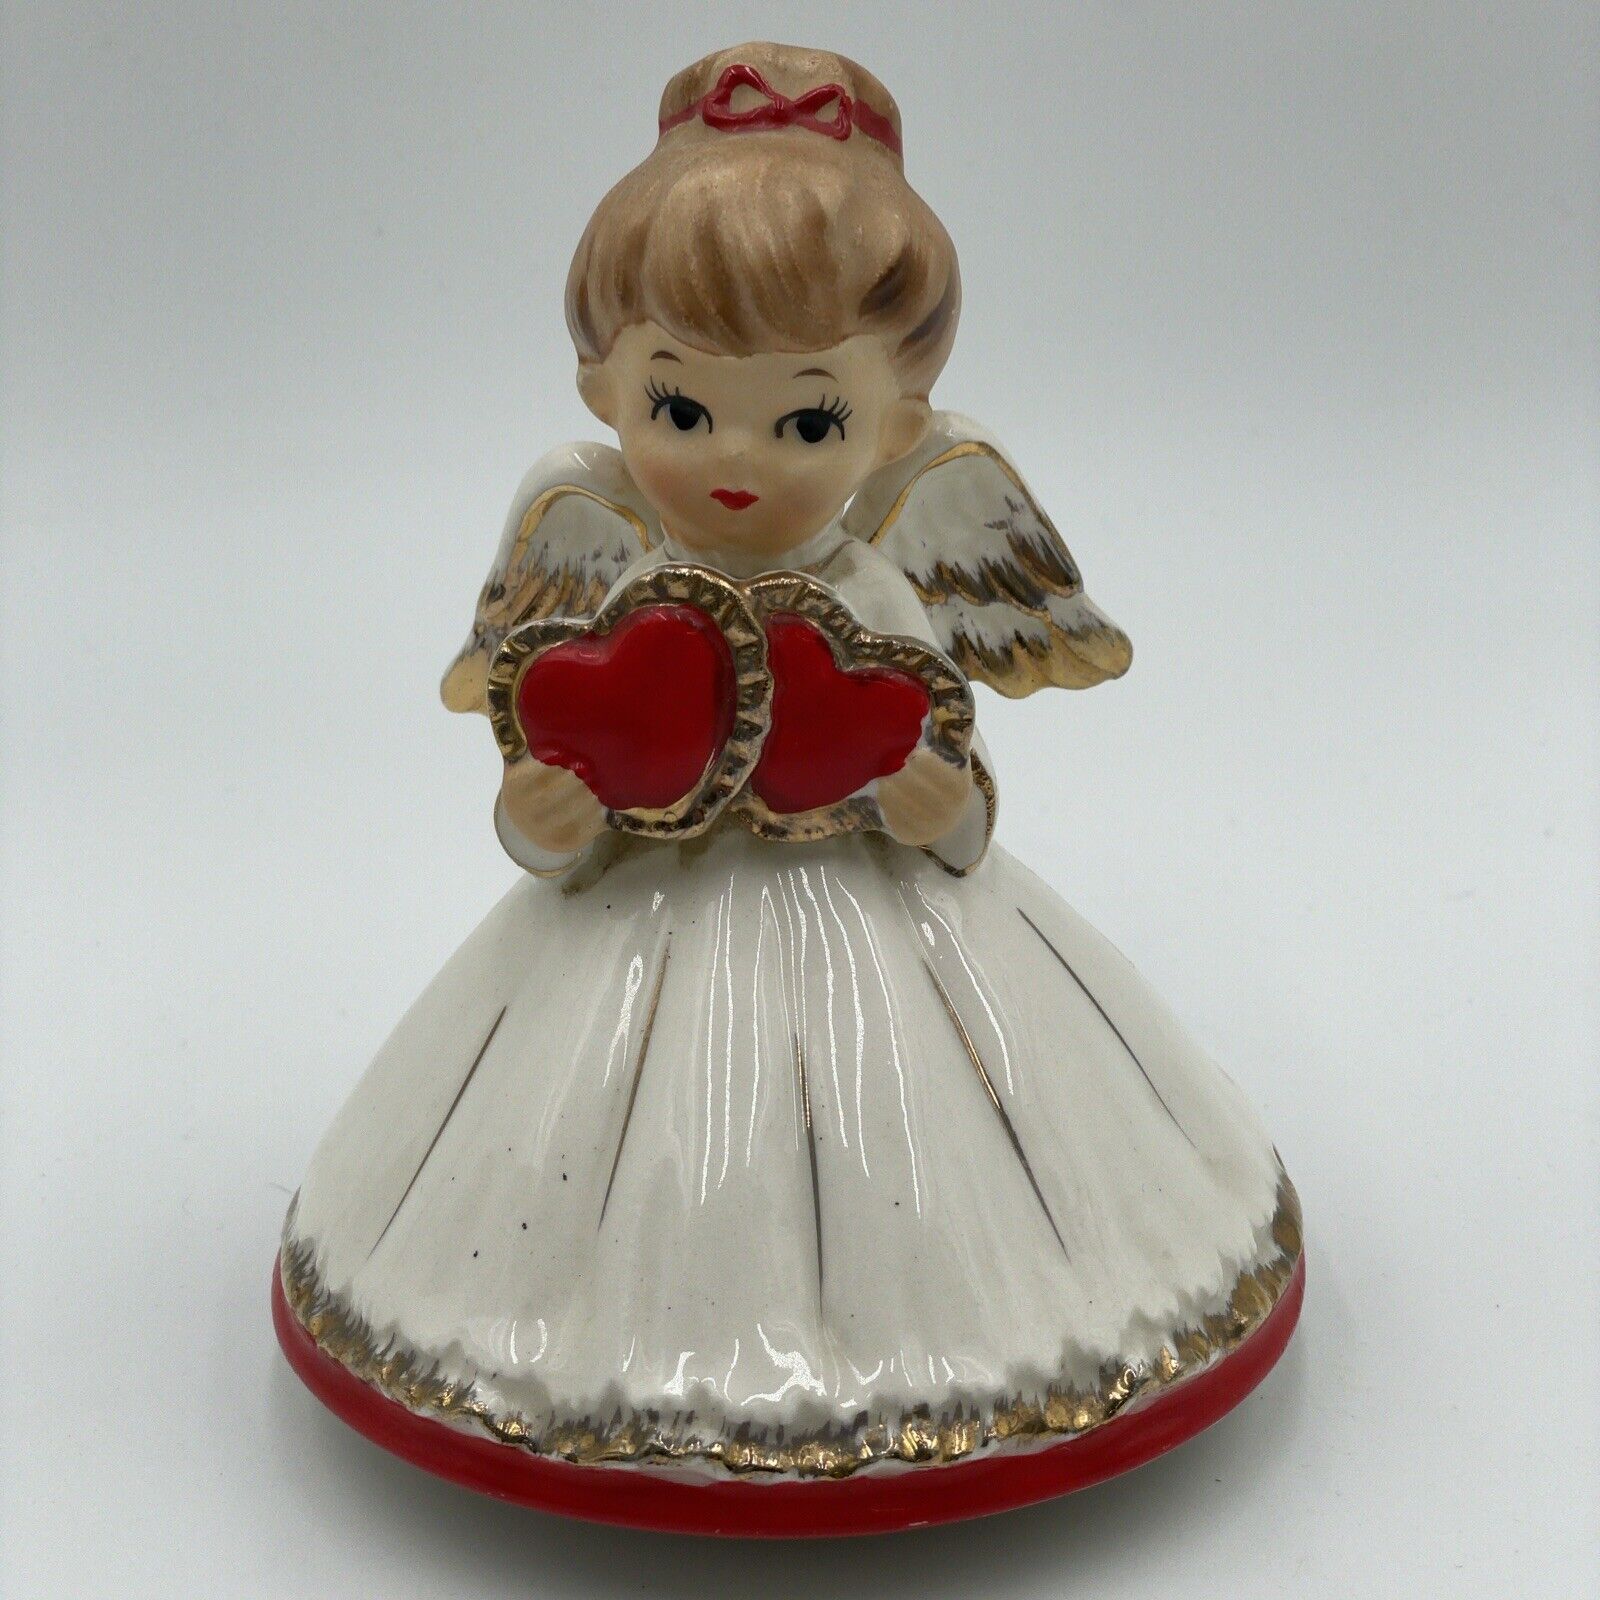 Vintage Lefton Japan Ceramic Valentine Angel Girl Music Box 3837 Works 50s Heart